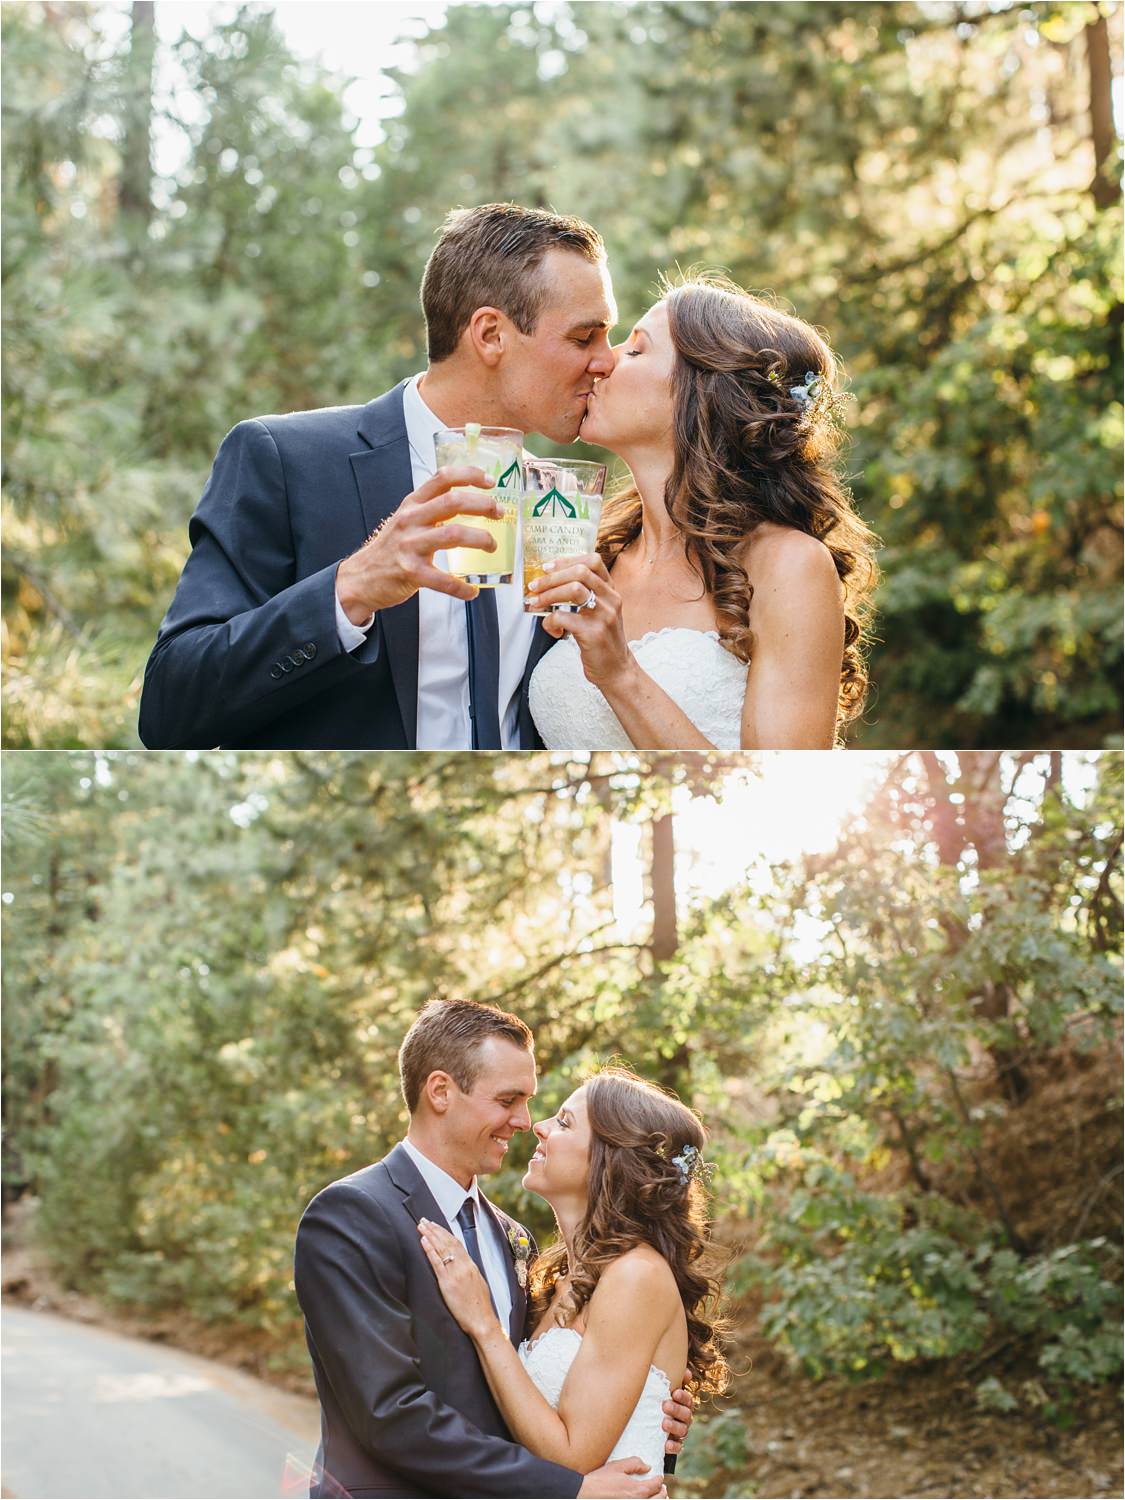 Summer Camp Wedding - Wedding in the Mountains - California Mountain Wedding - https://brittneyhannonphotography.com